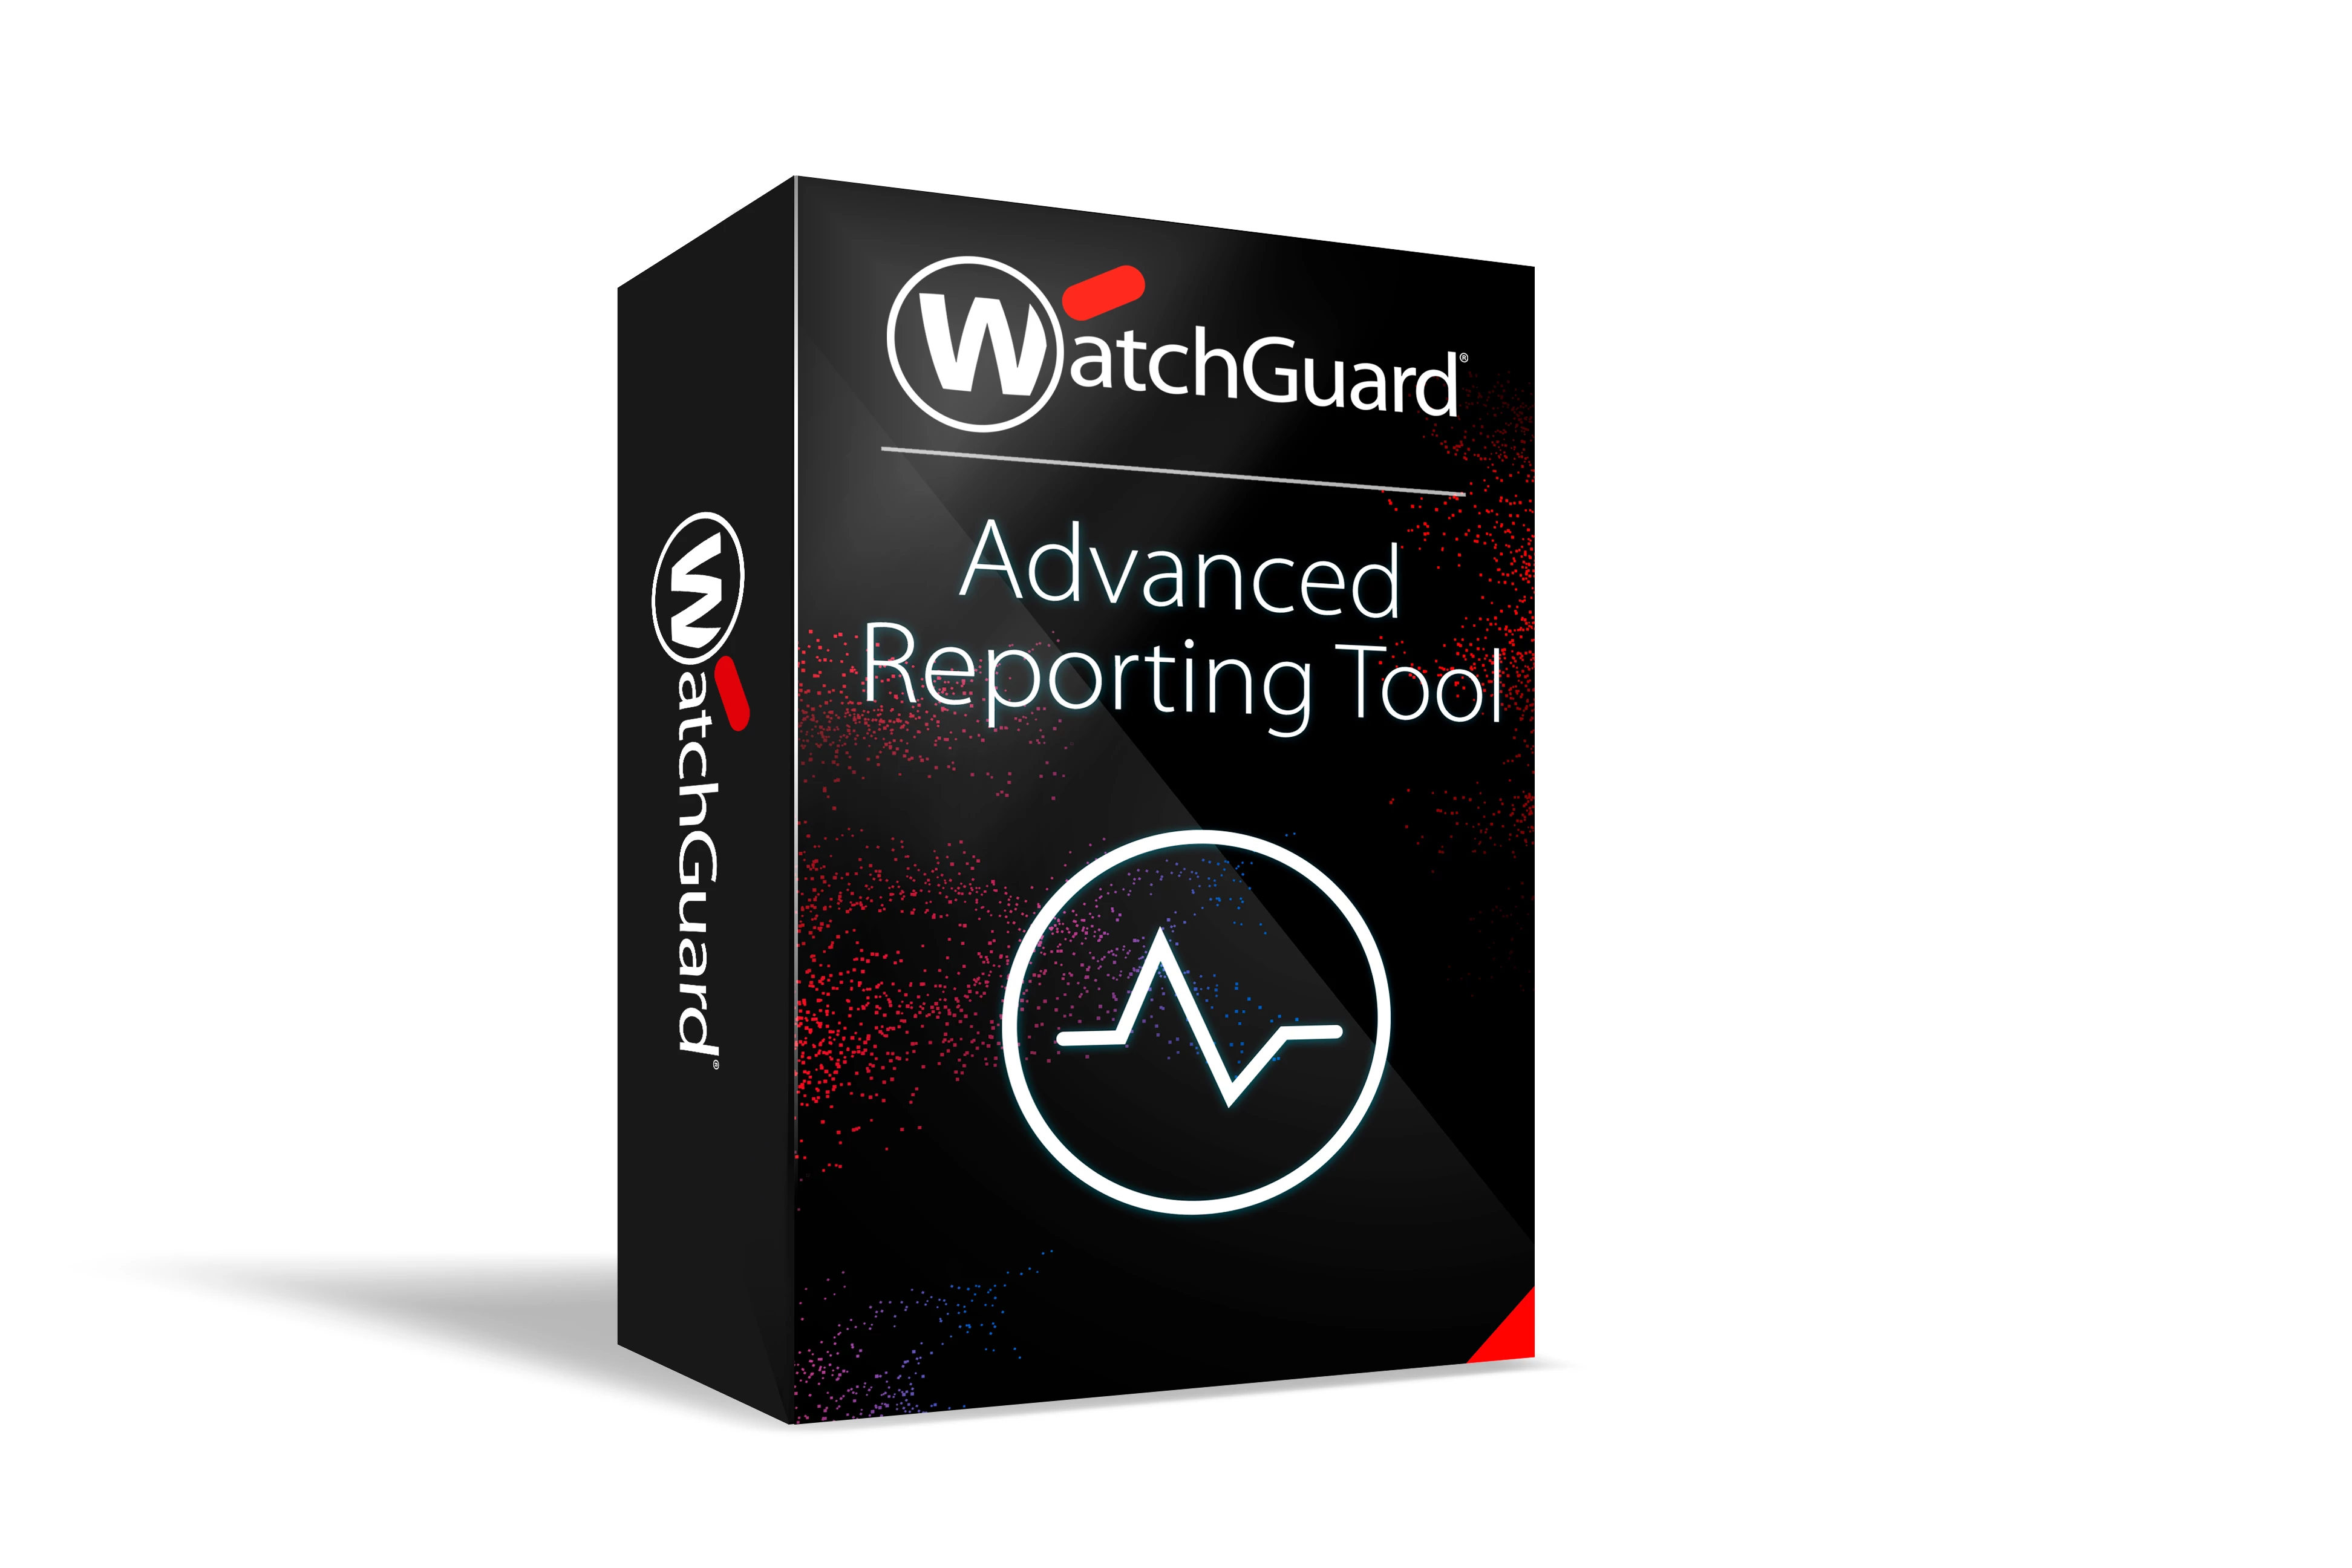 Watchguard advanced reporting tool